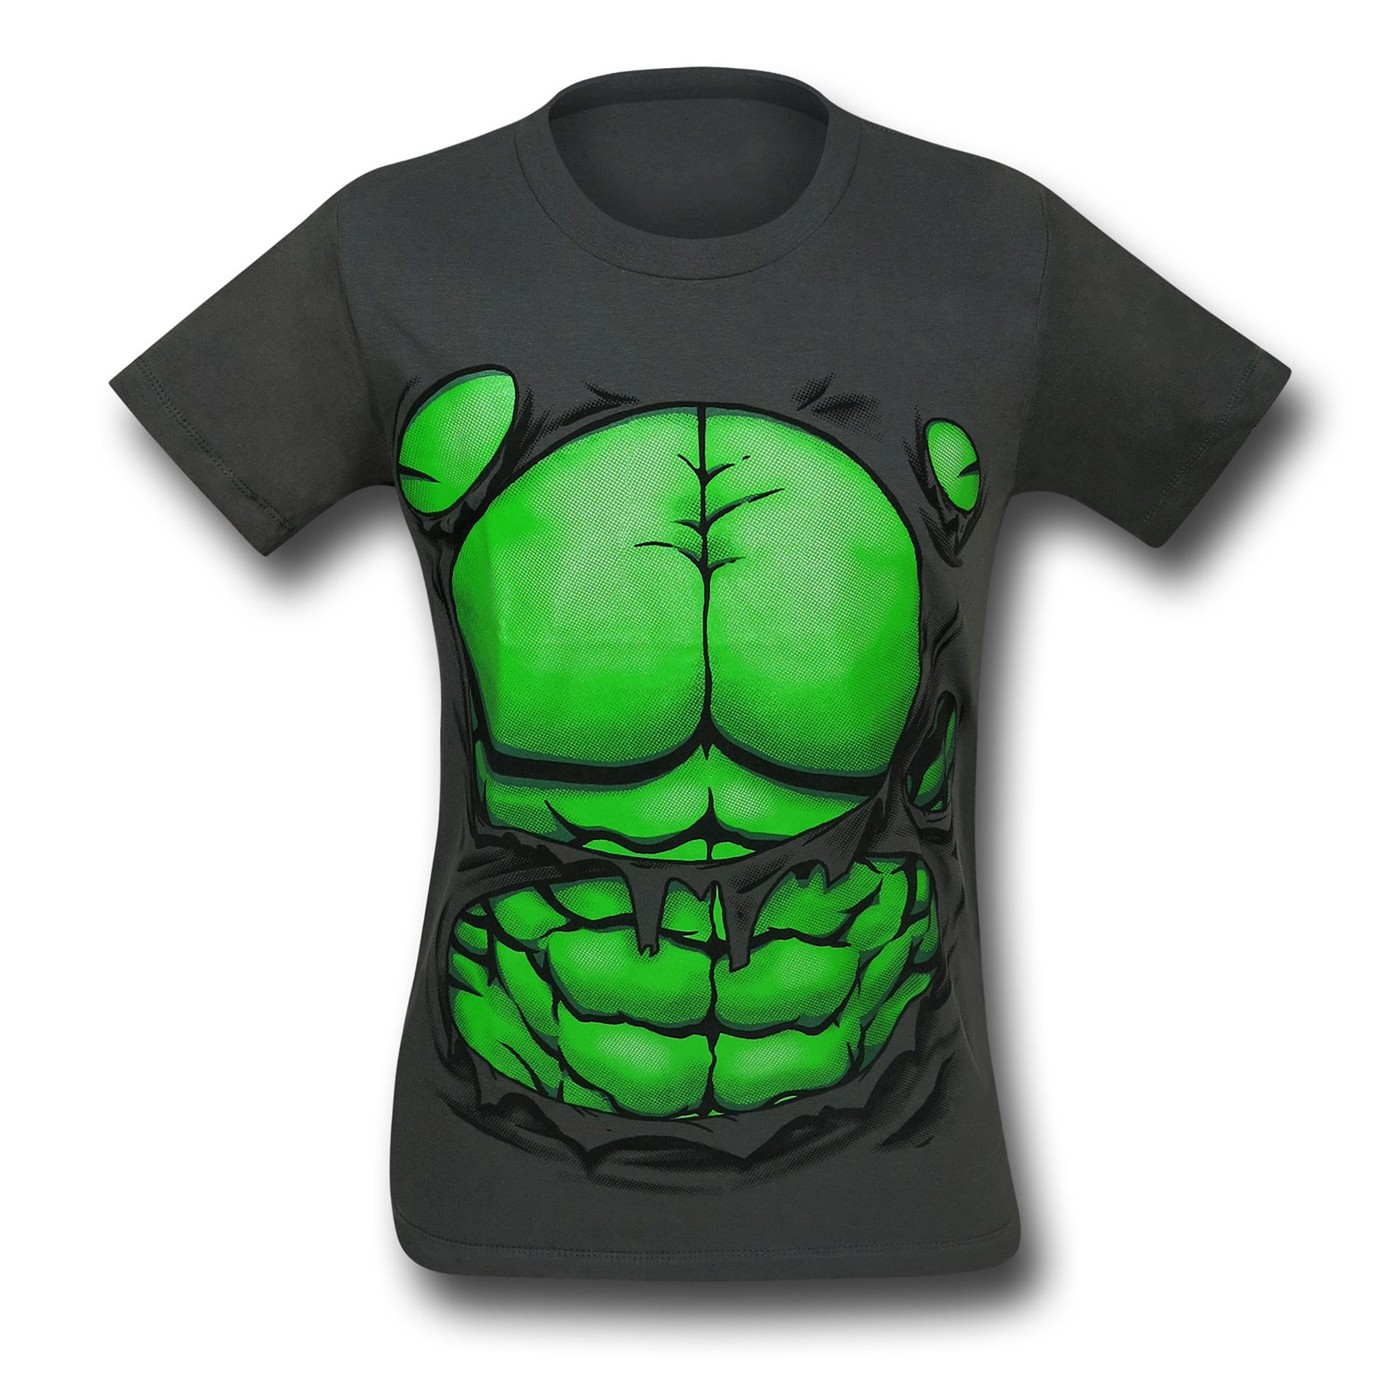 Incredible Hulk Rip Through 30 Single T-Shirt.